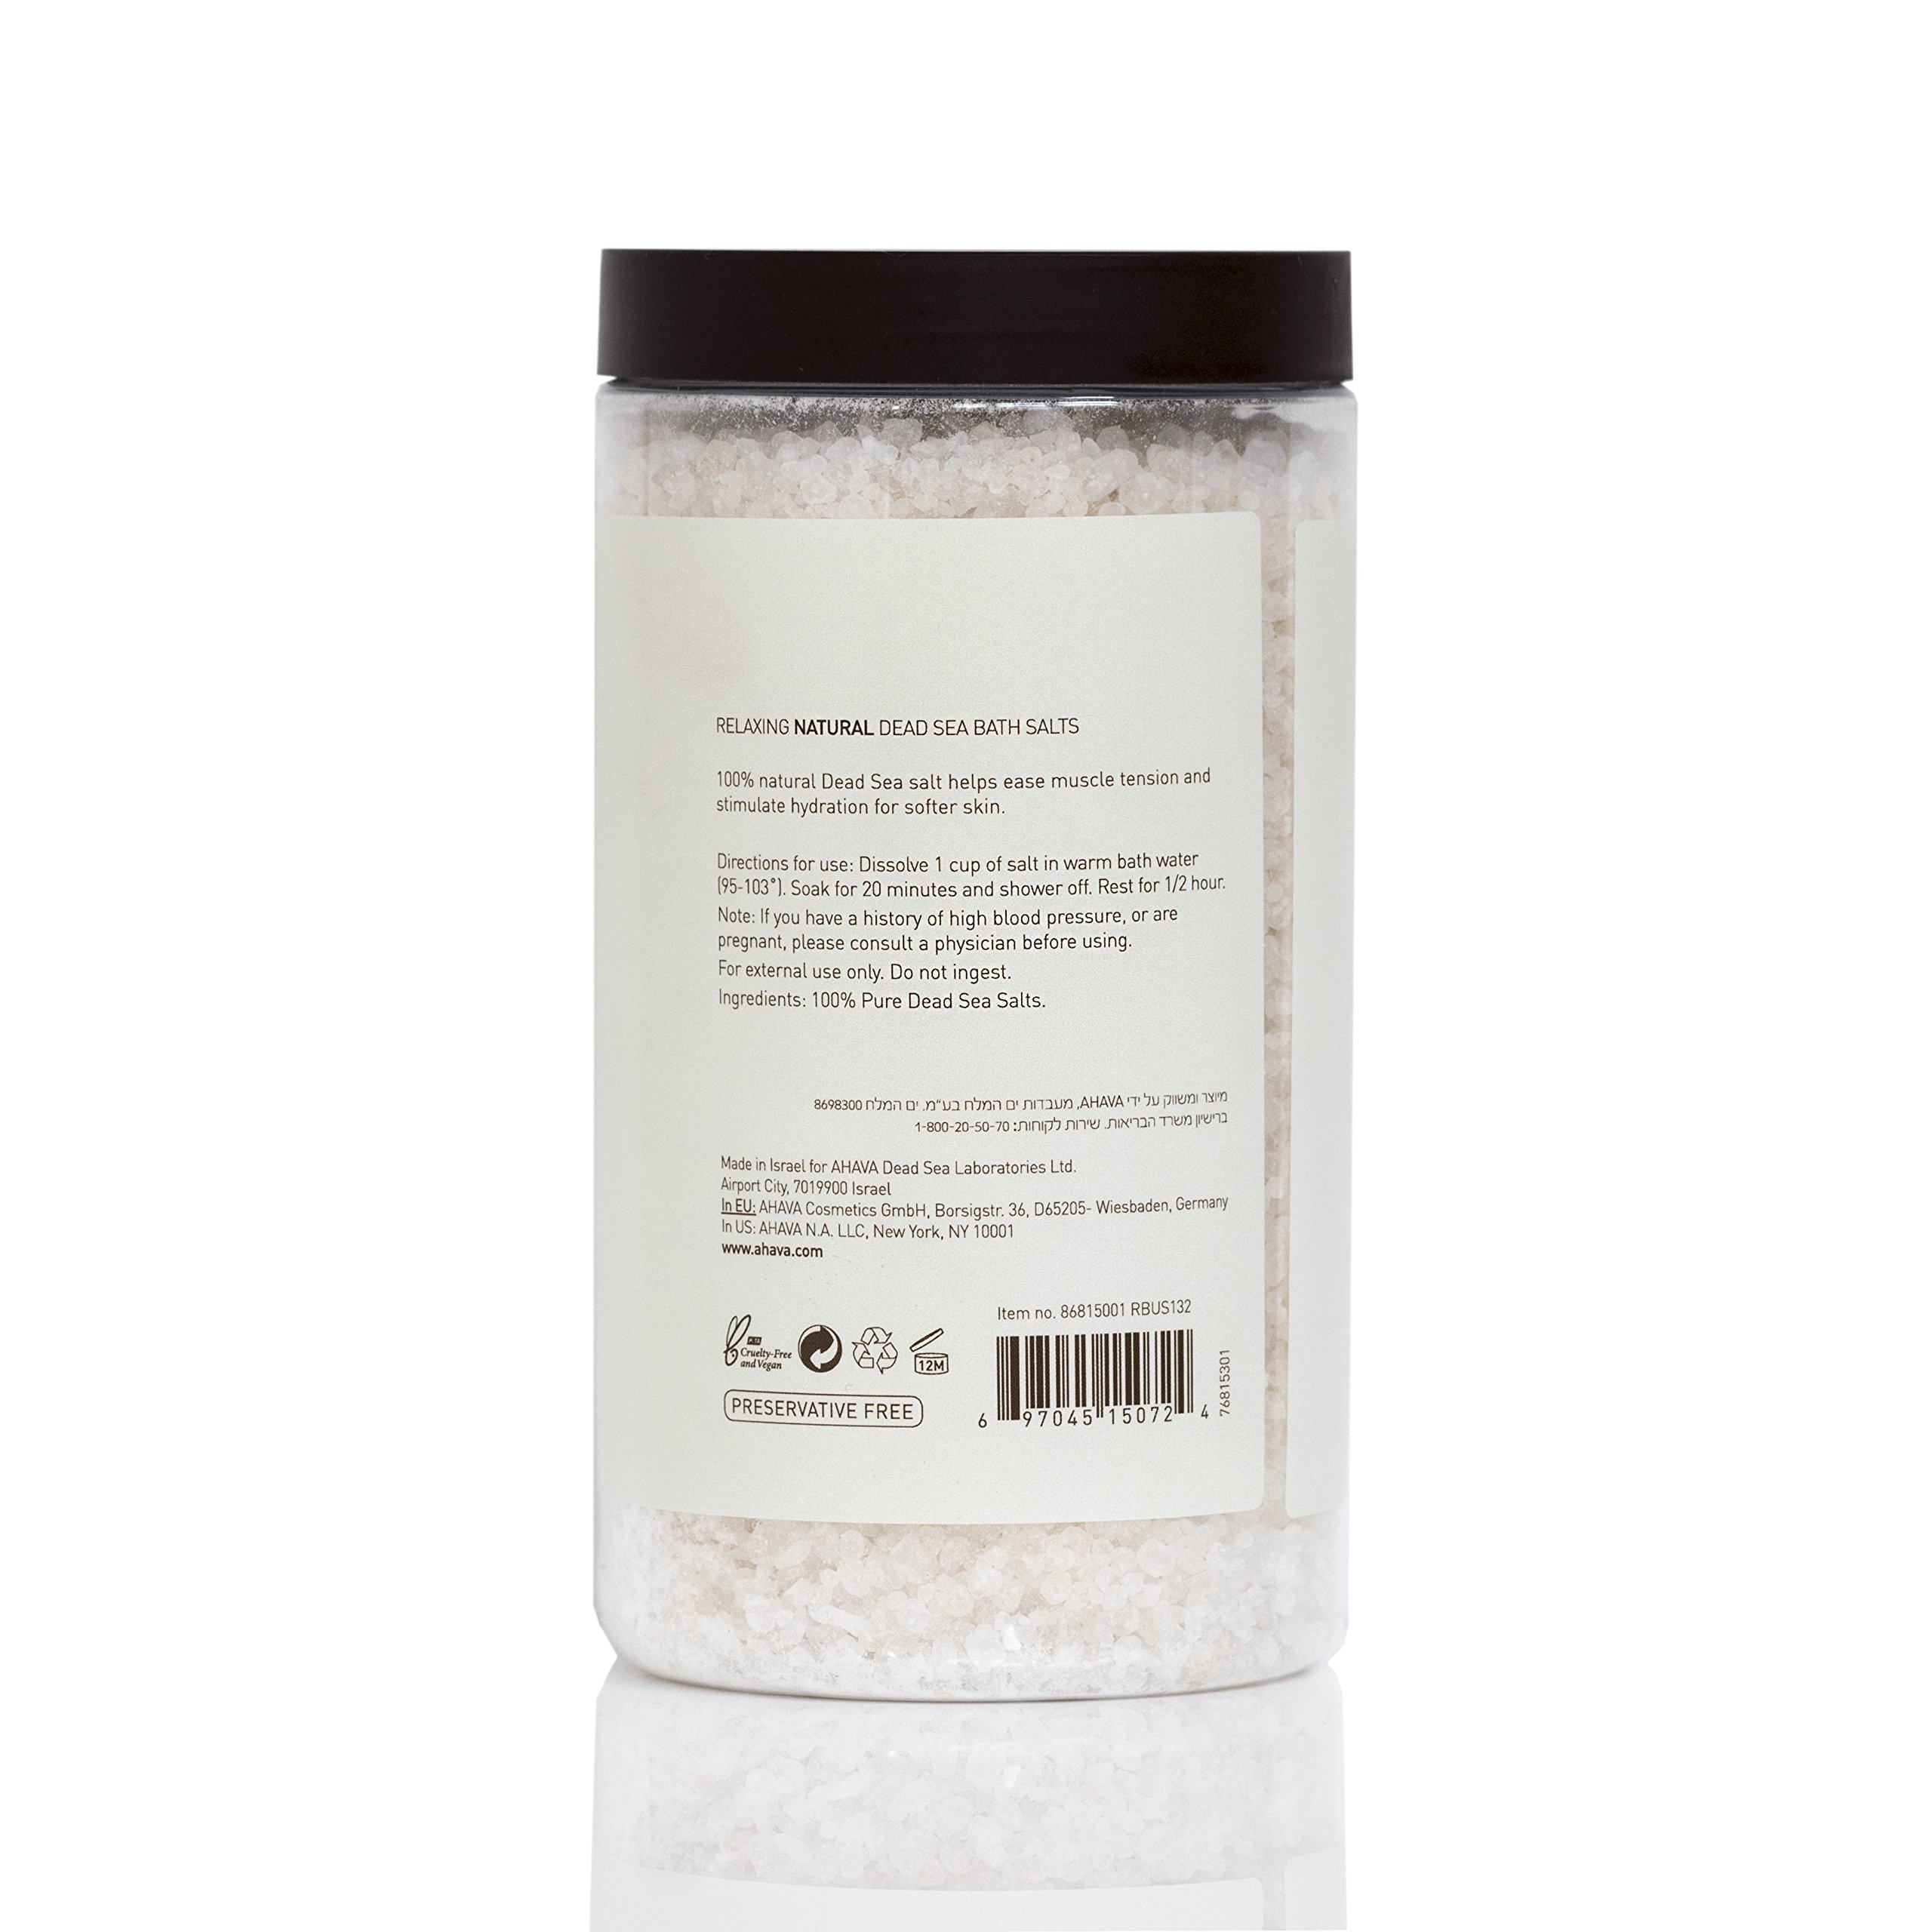 AHAVA Dead Sea Mineral Bath Salt - Bath Soak for Nourishing Essential Body Care, 32 oz.